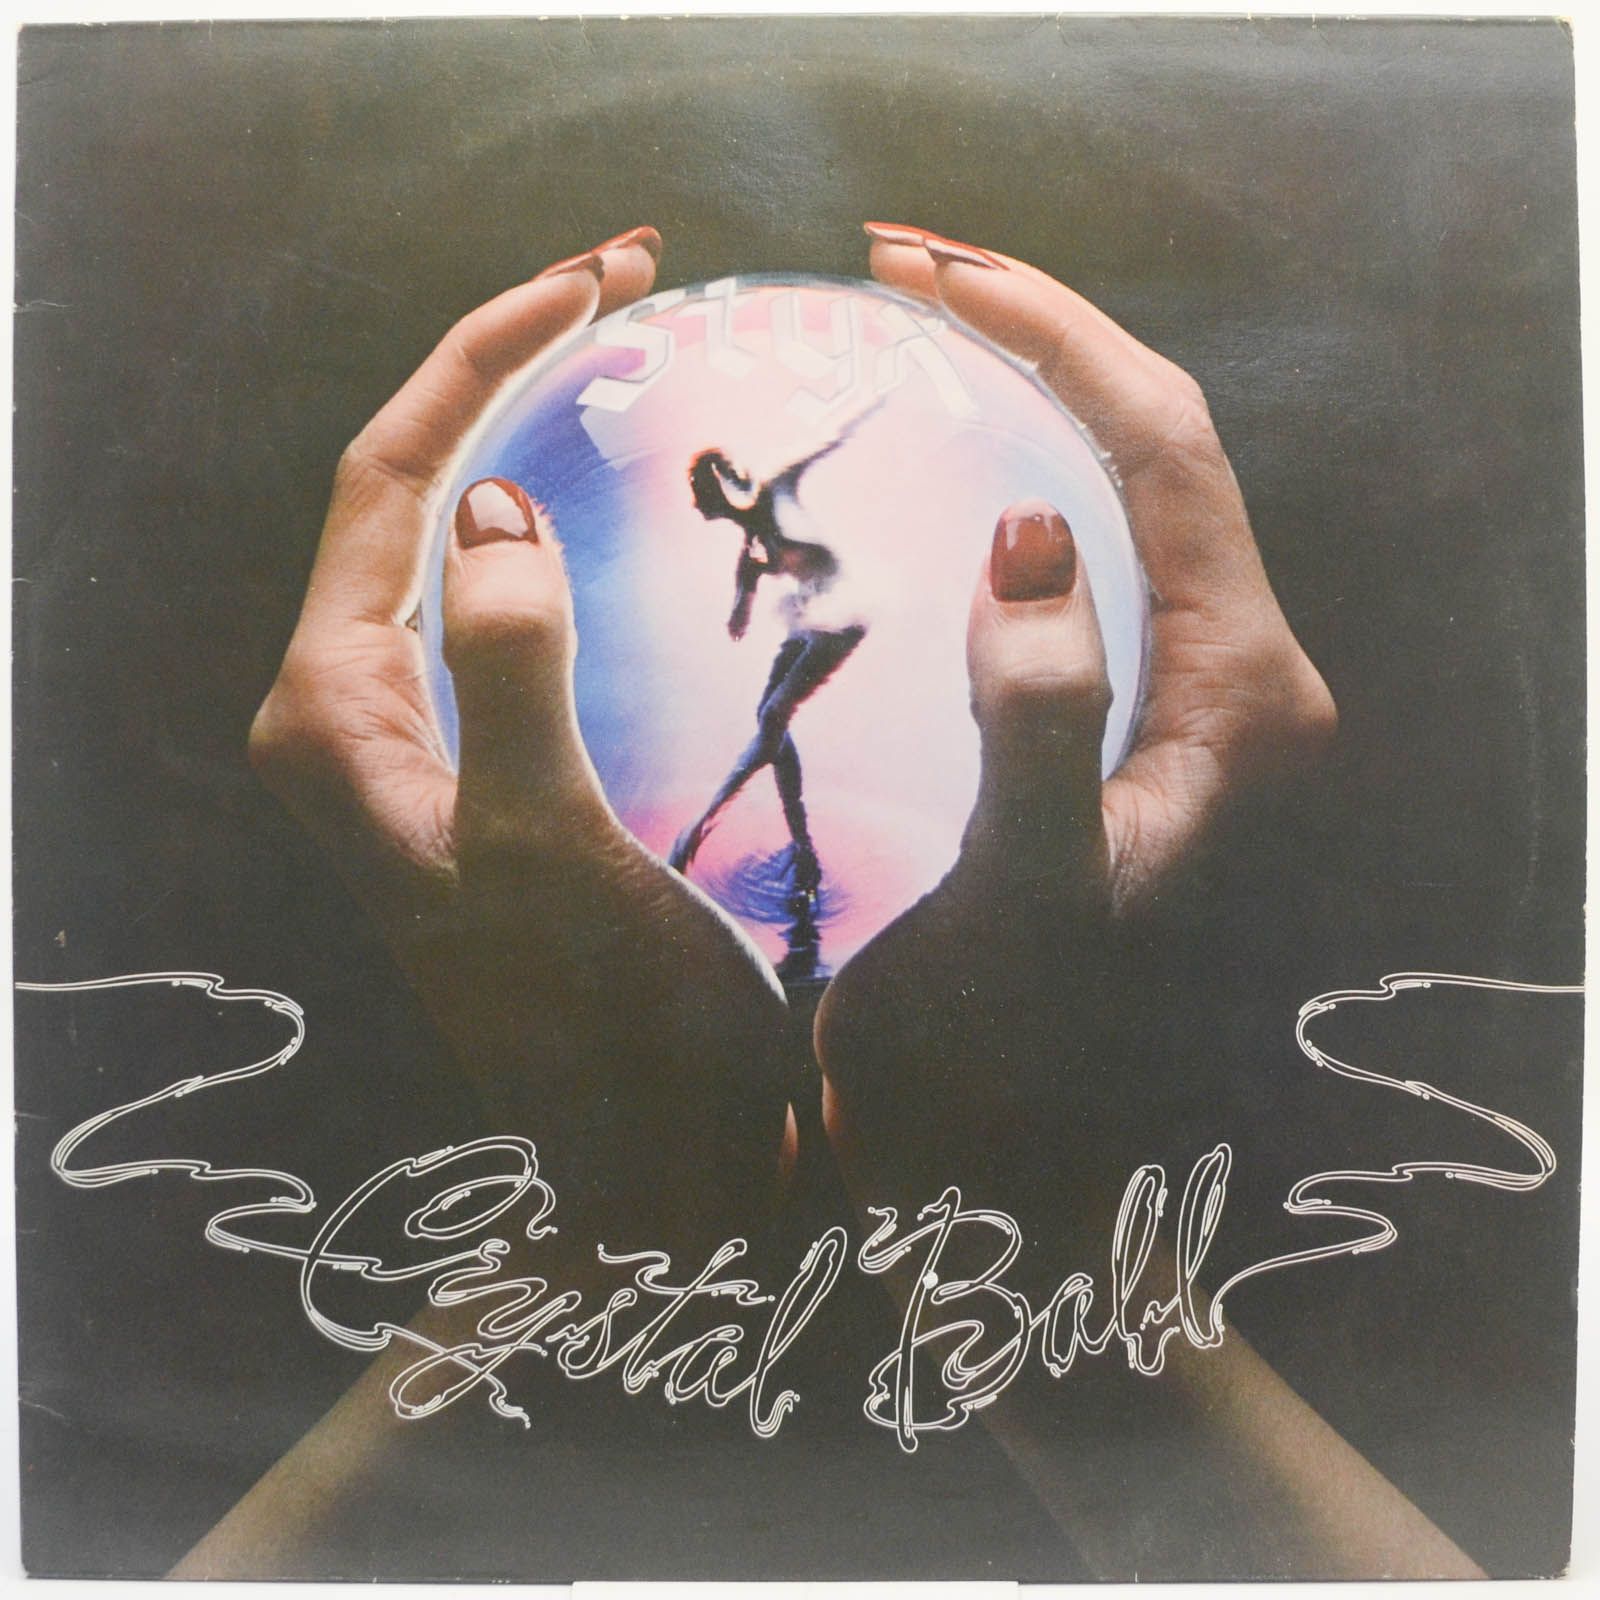 Styx — Crystal Ball, 1976